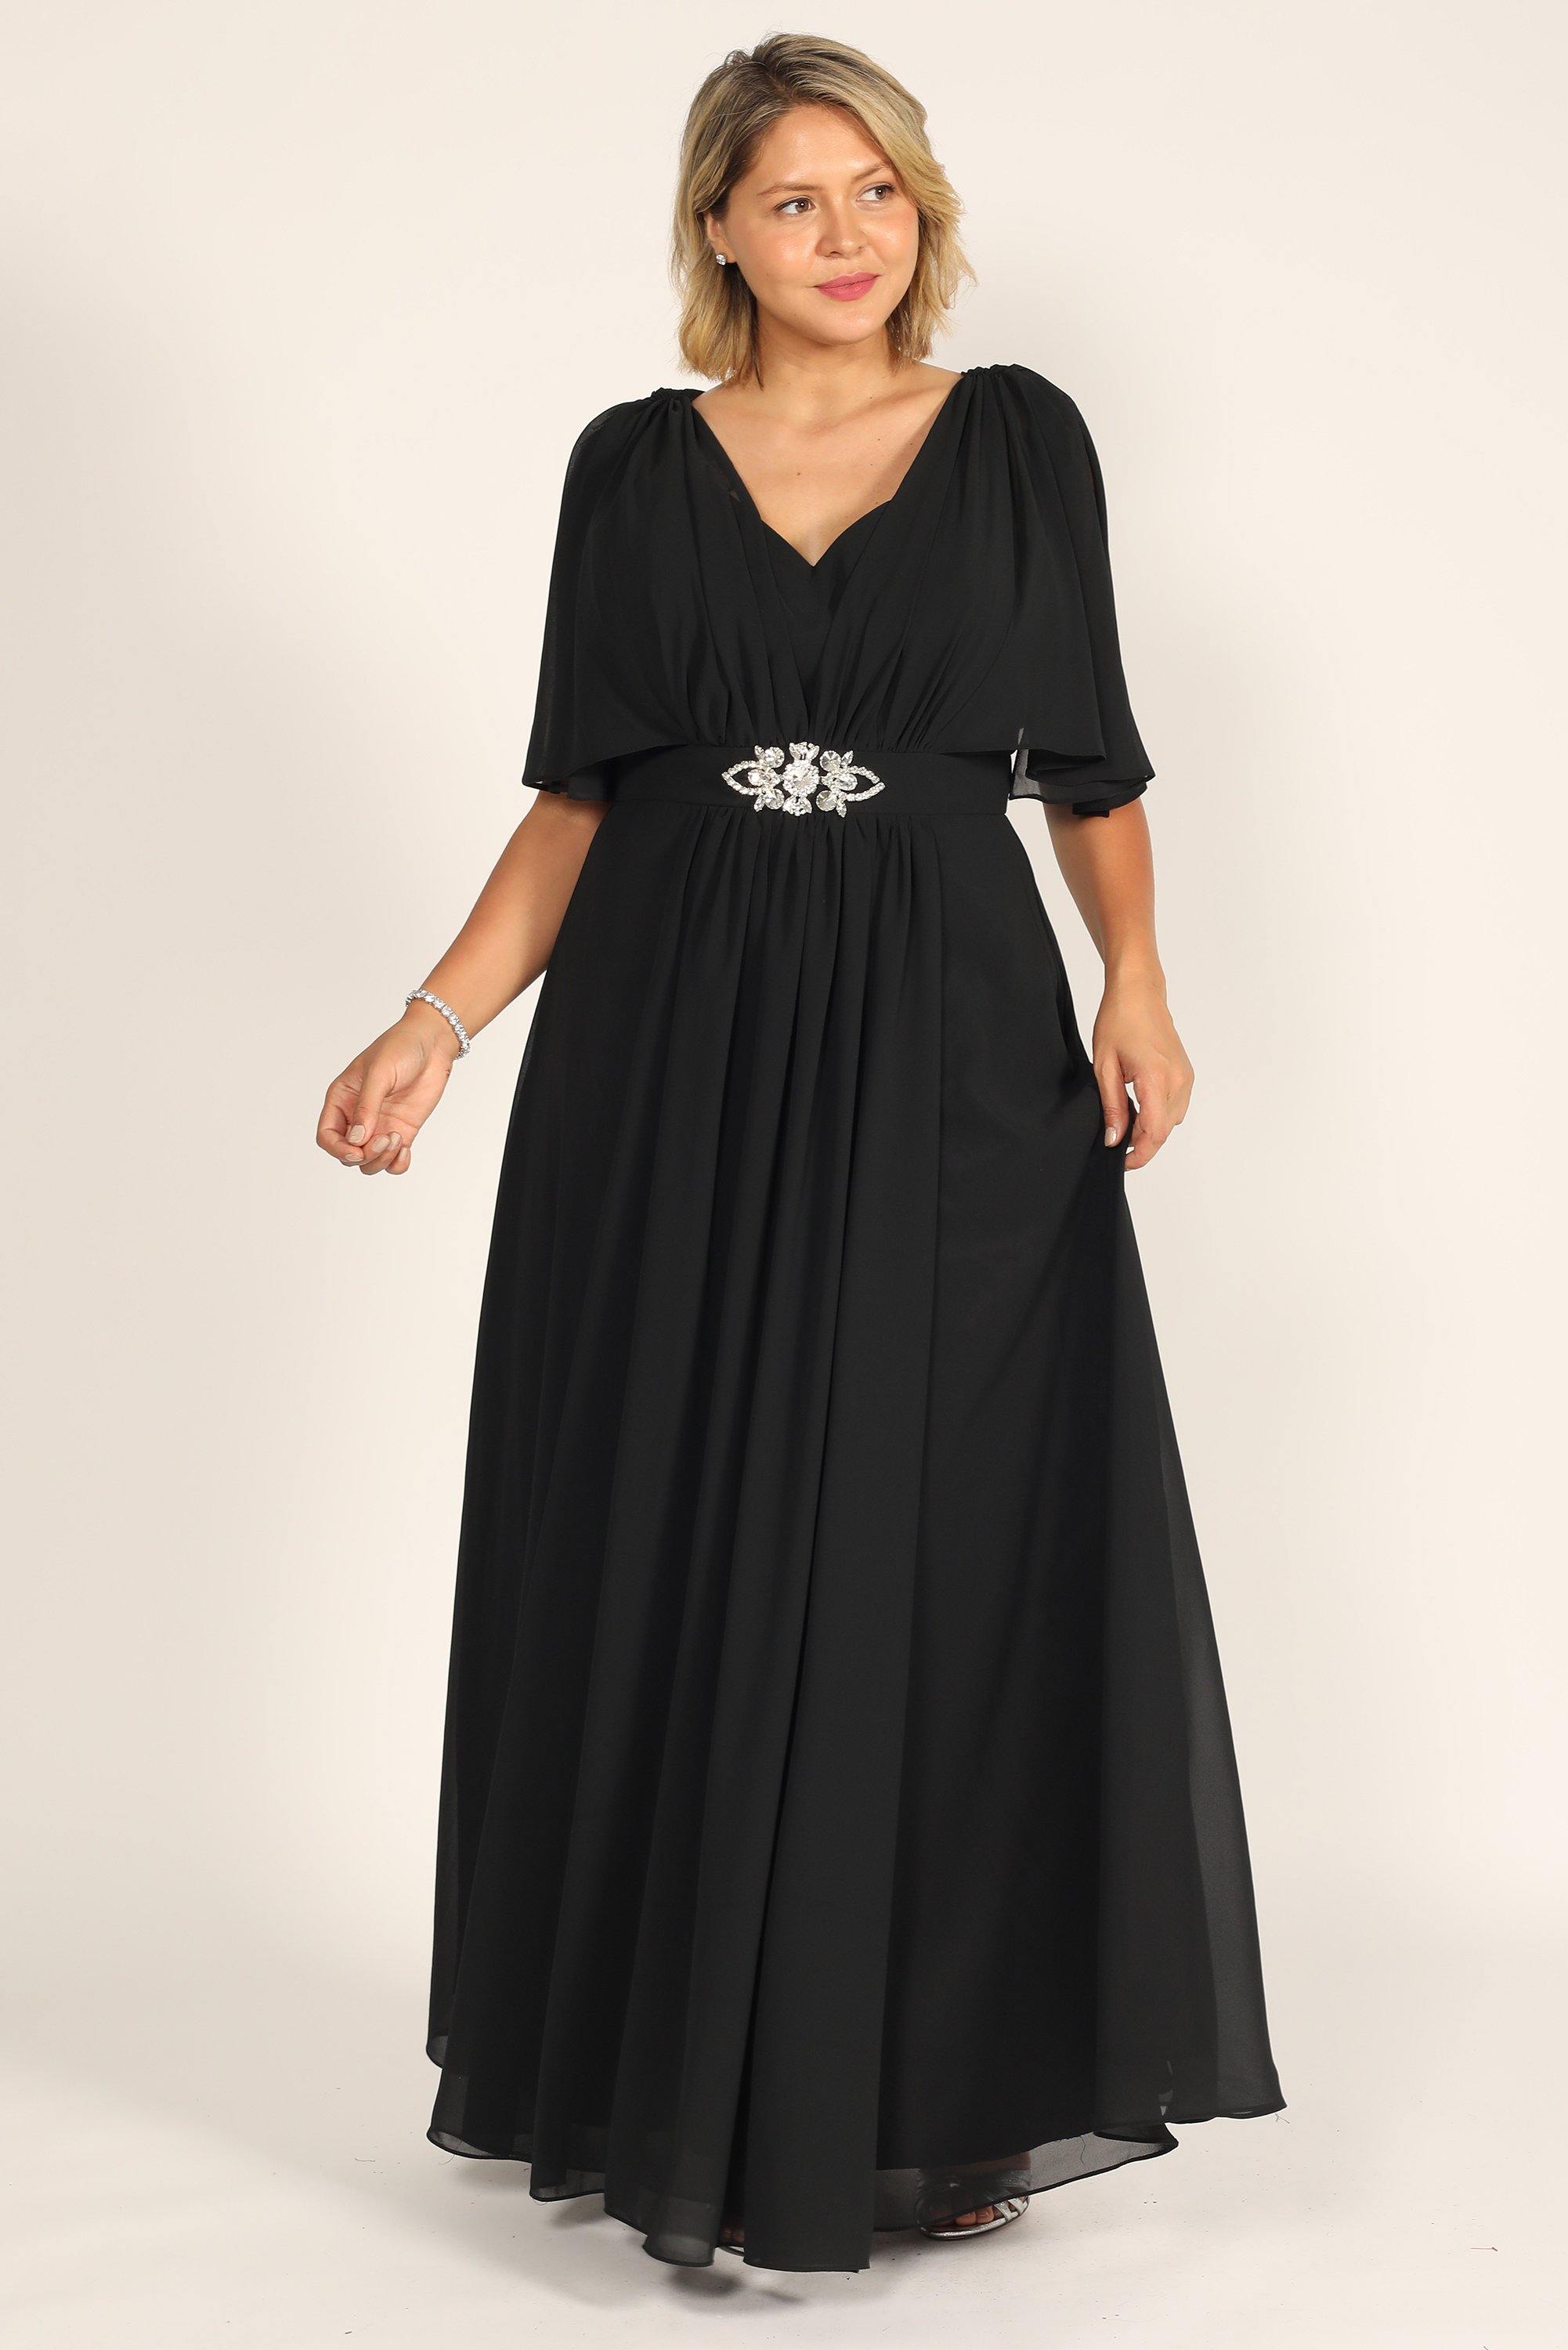 Black Long Formal Mother of the Bride Dress for $29.99 – The Dress Outlet